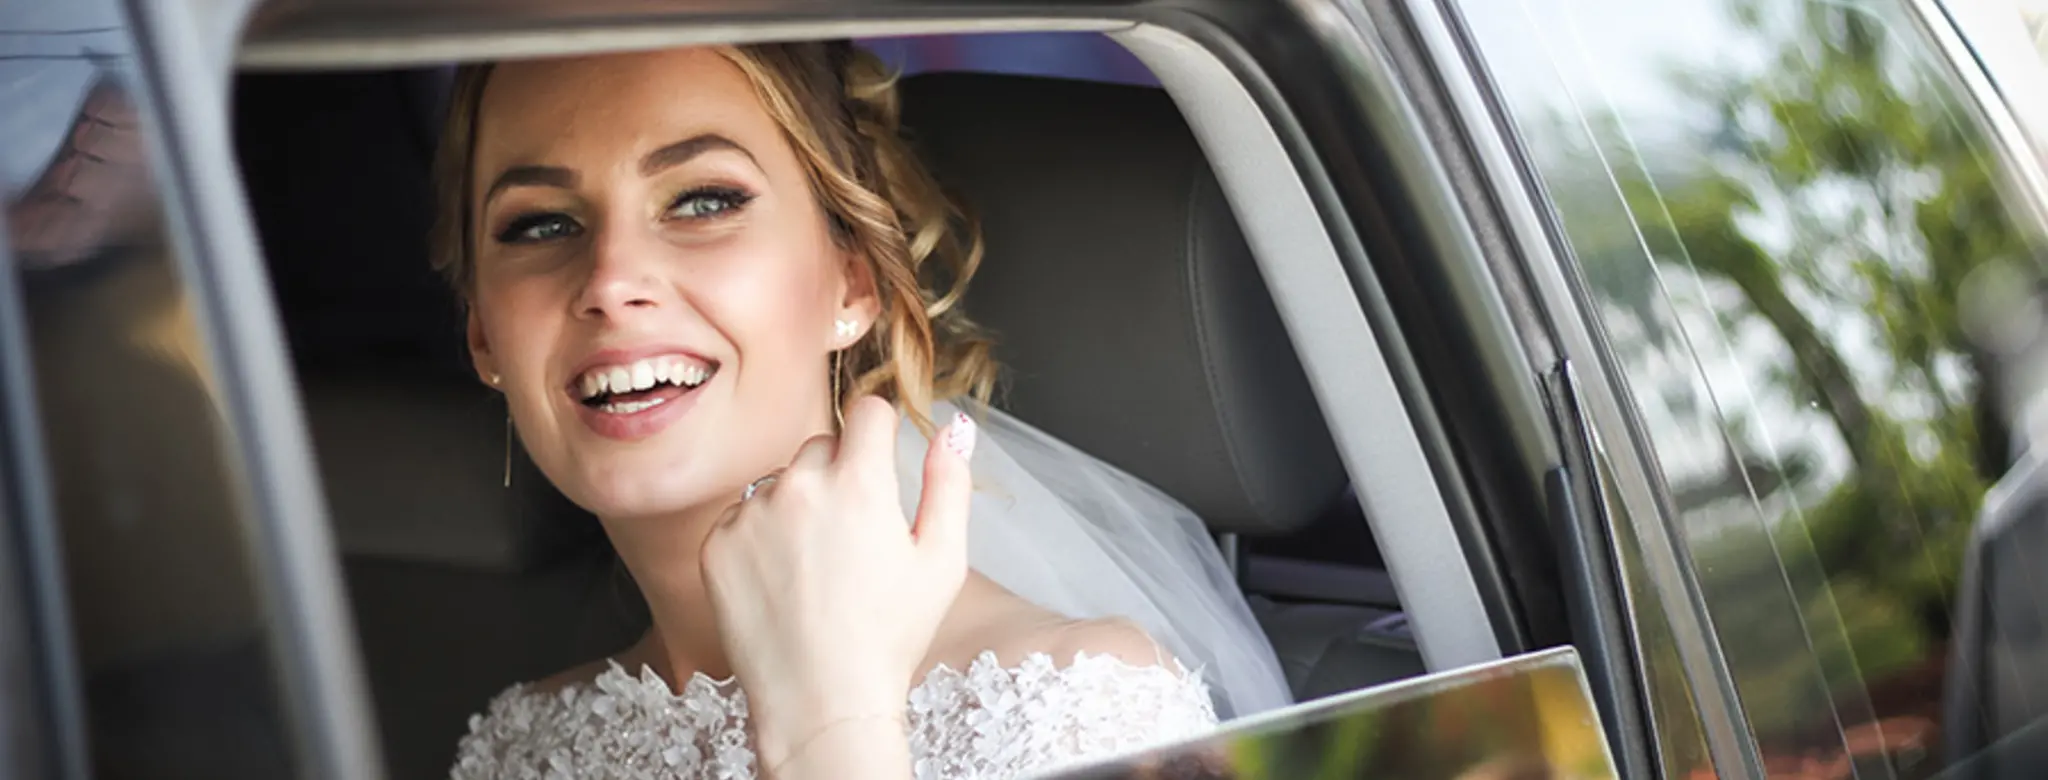 Bride smiling in car window